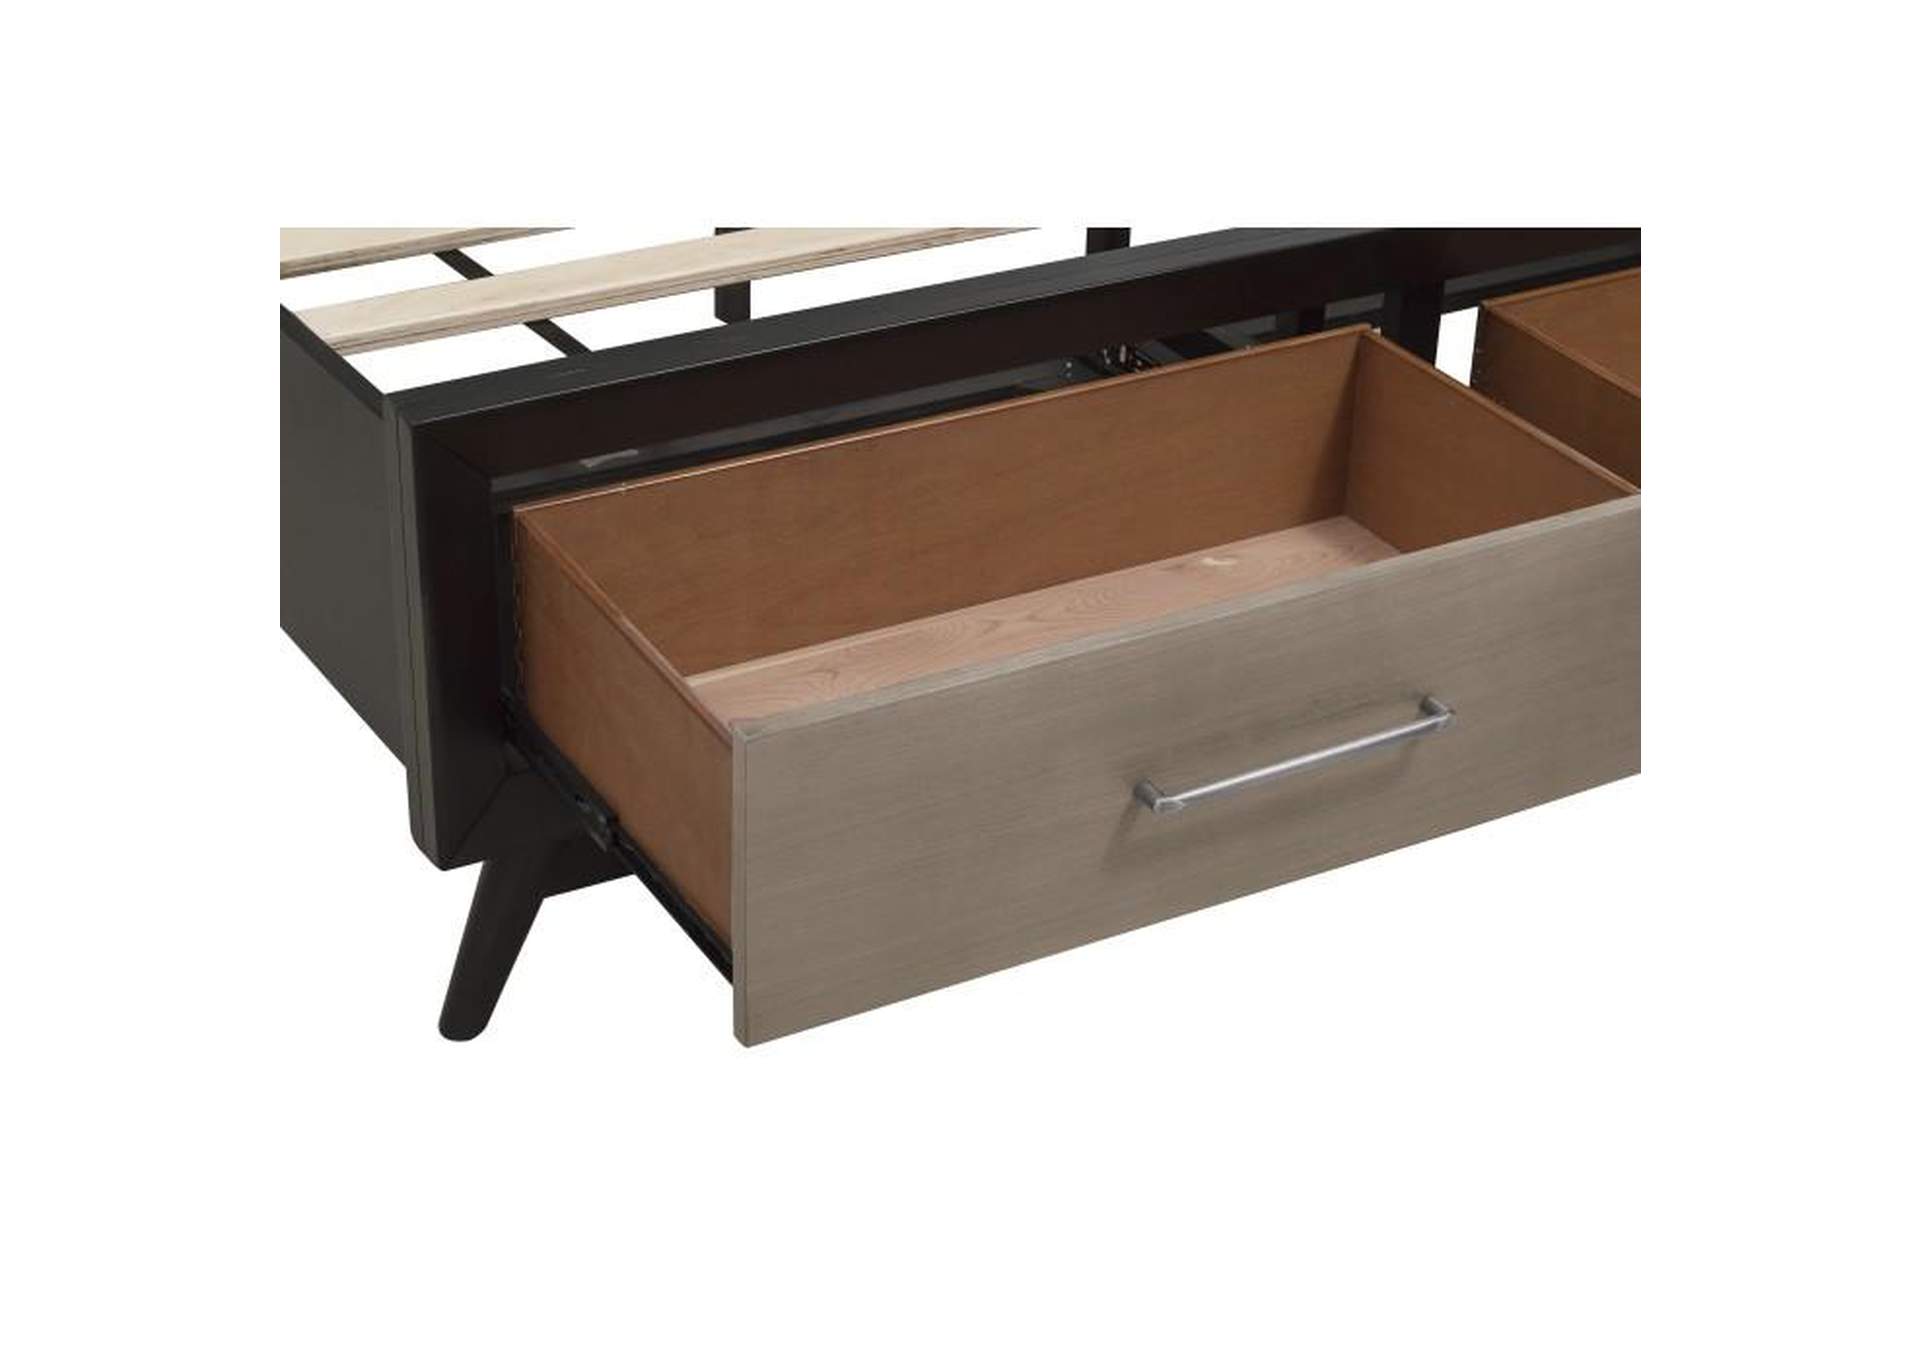 Raku Full Platform Bed With Footboard Storage,Homelegance